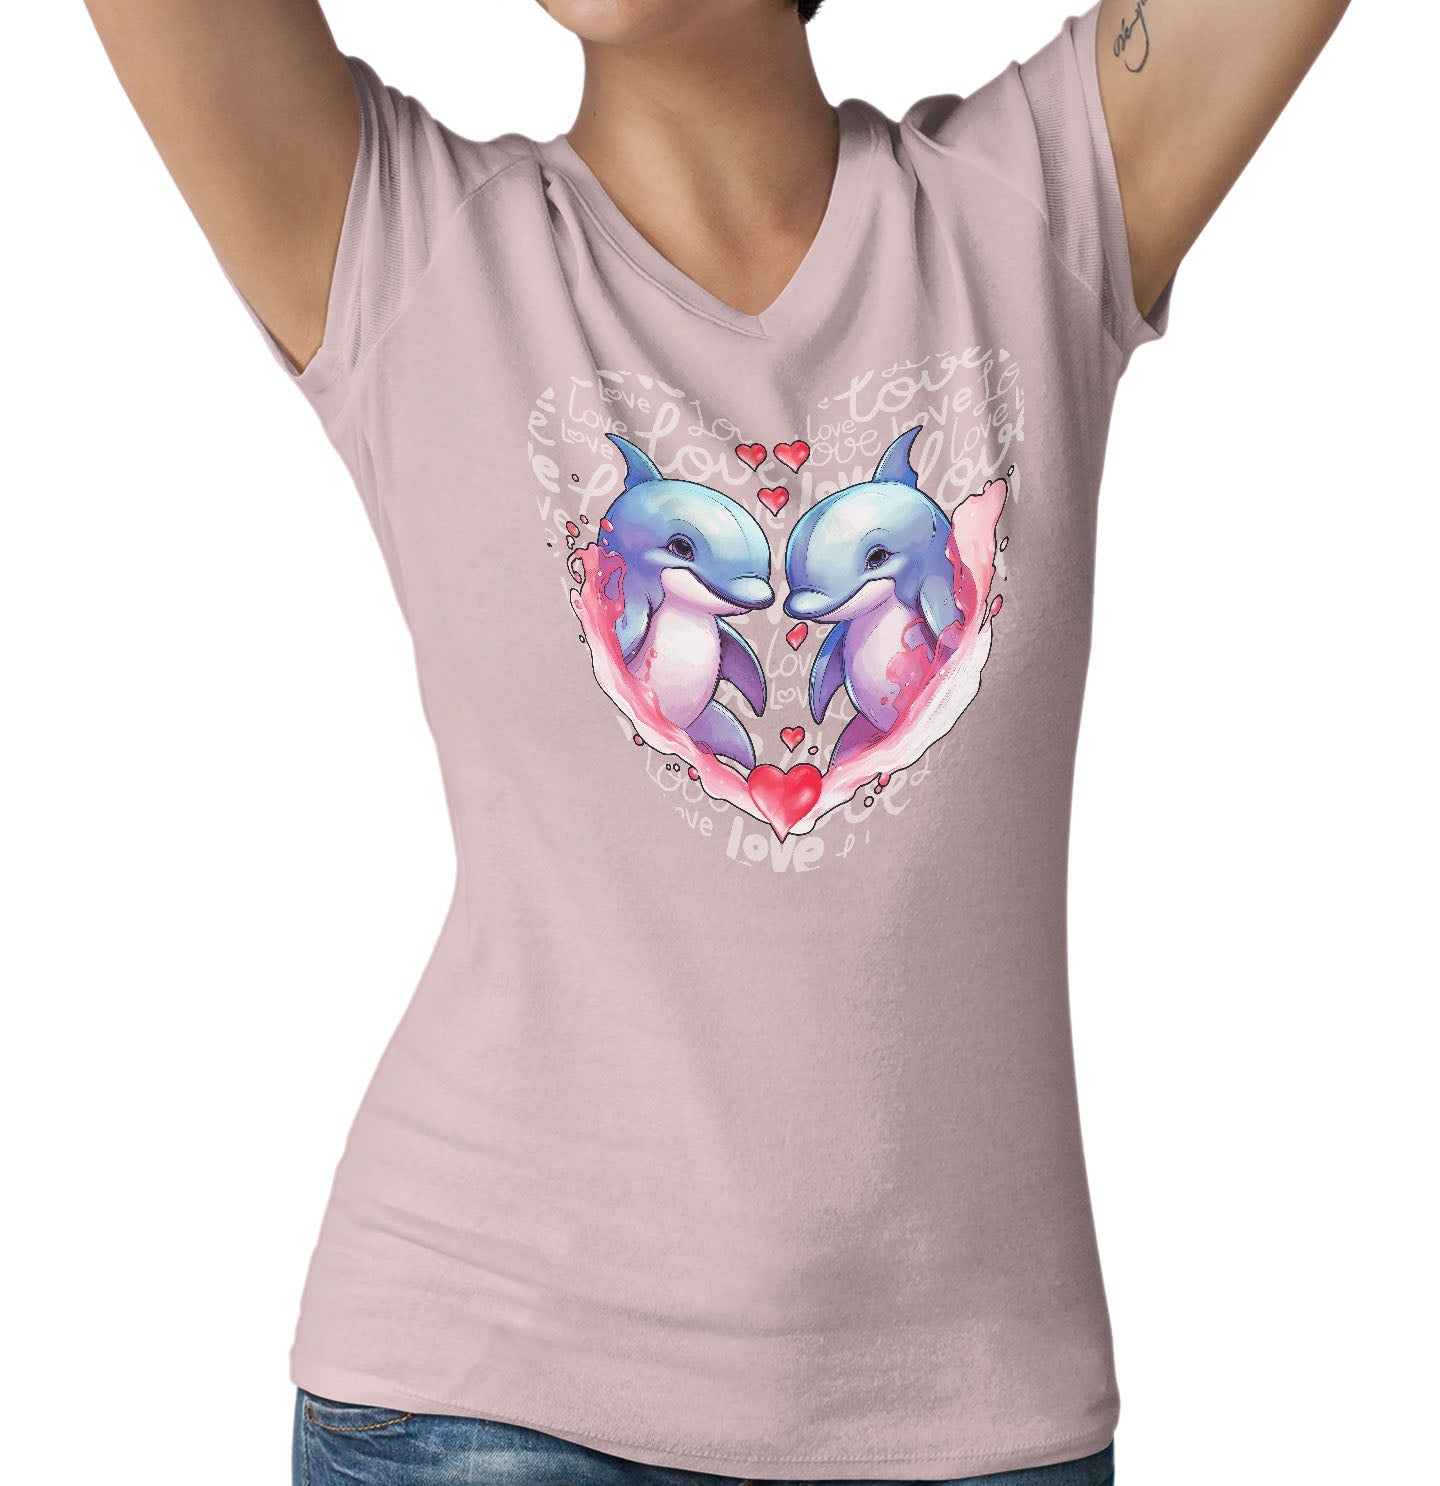 Dolphin Love Heart - Women's V-Neck T-Shirt